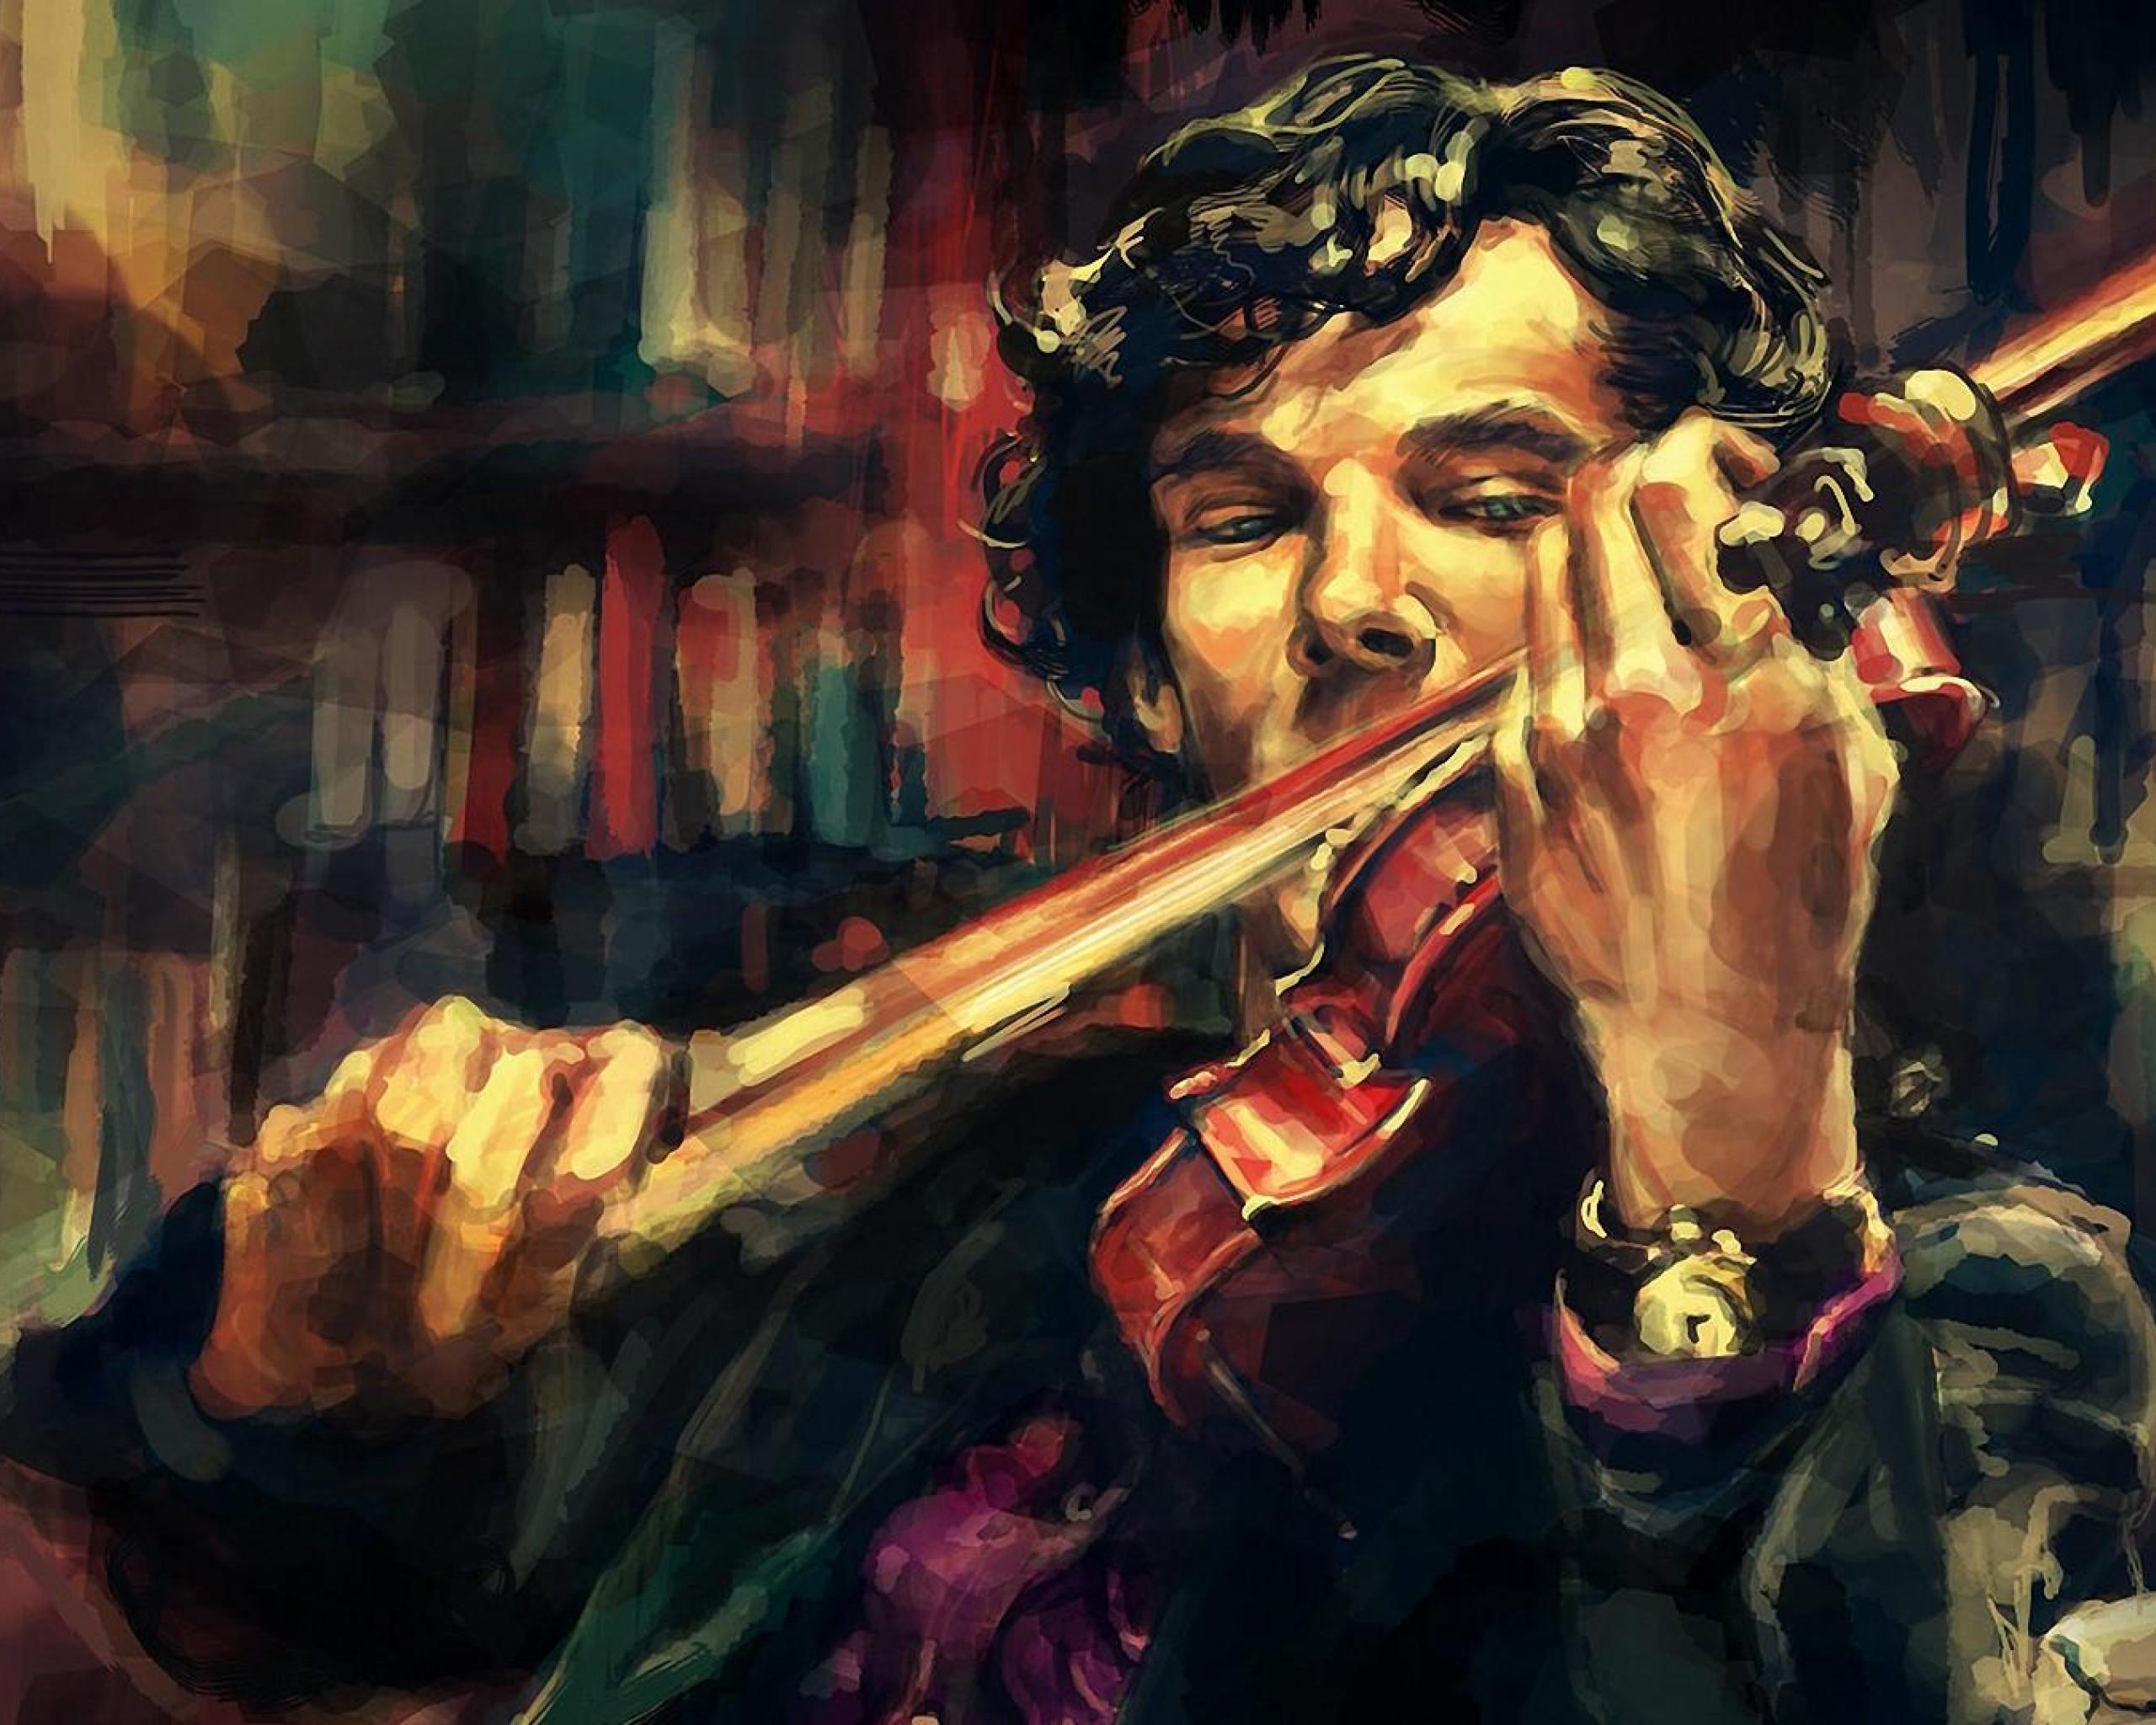 Музыка это искусство. Бенедикт Камбербэтч Шерлок обои арт. Шерлок Холмс Бенедикт Камбербэтч со скрипкой. Обои на рабочий стол Шерлок Холмс Бенедикт. Бенедикт Камбербэтч со скрипкой.